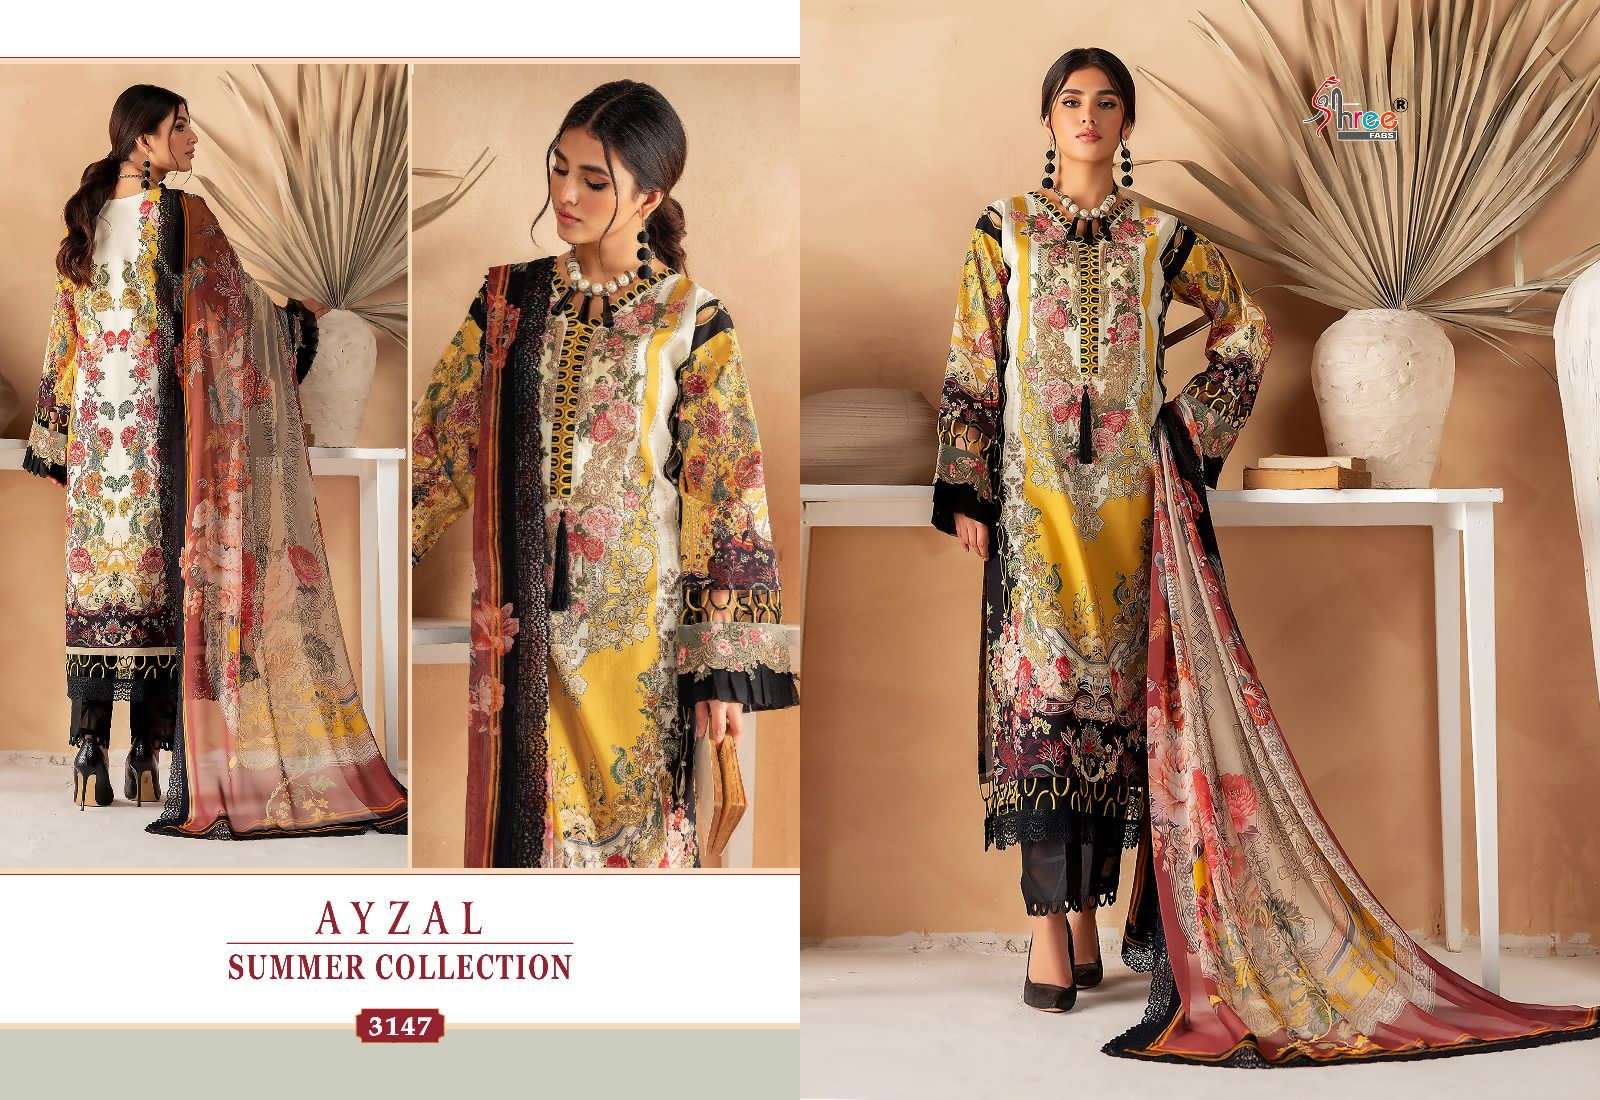 Shree Ayzal Summer Collection Cotton Dupatta Pakistani Suits Wholesale catalog